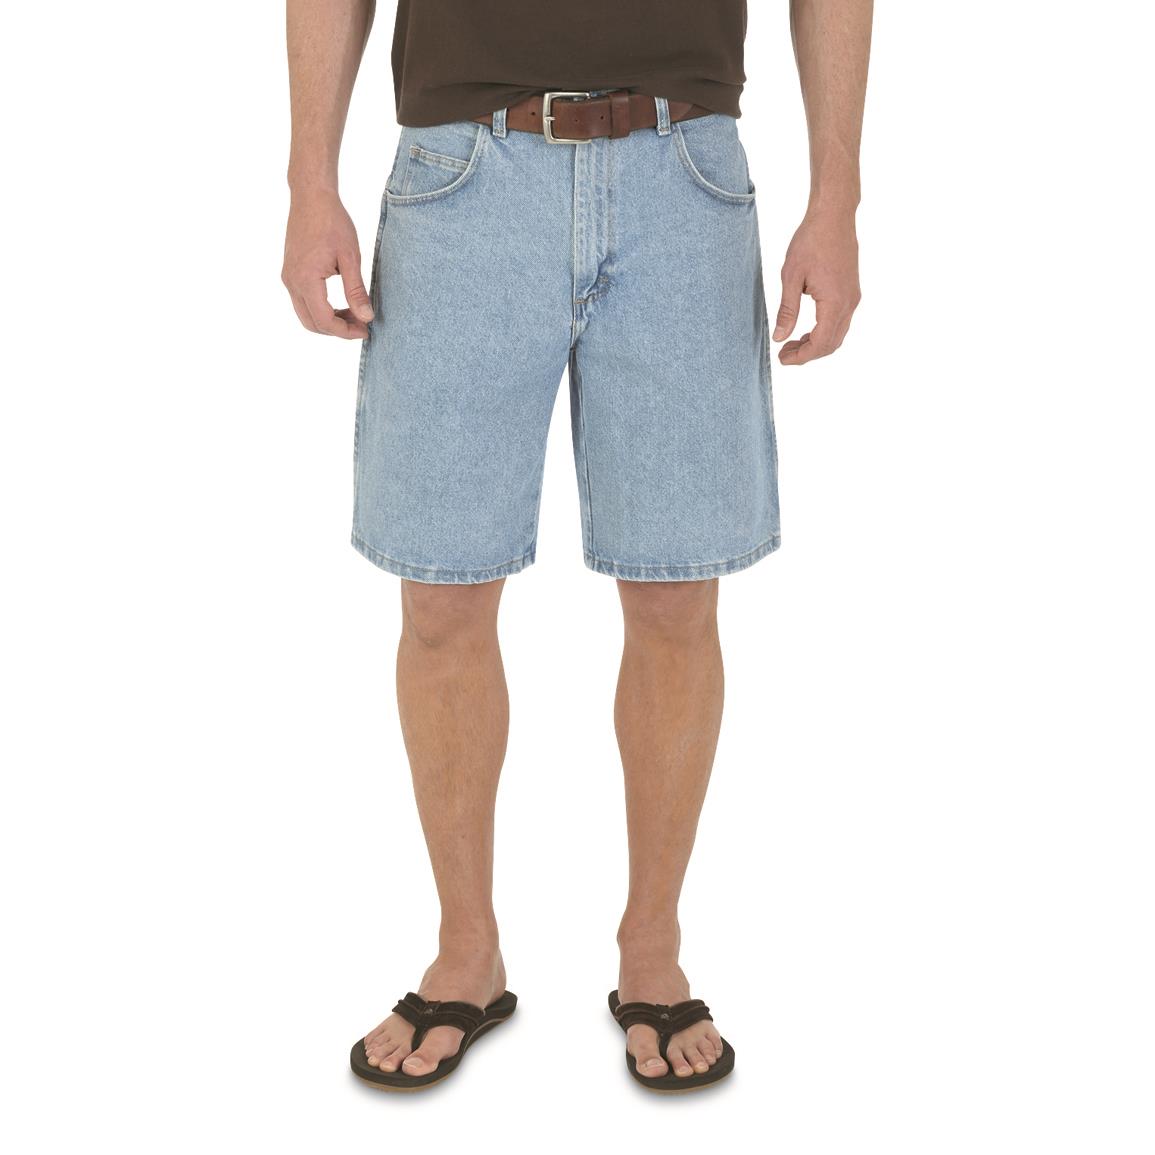 Wrangler Men's Rugged Wear Relaxed Fit Shorts, Vintage Indigo